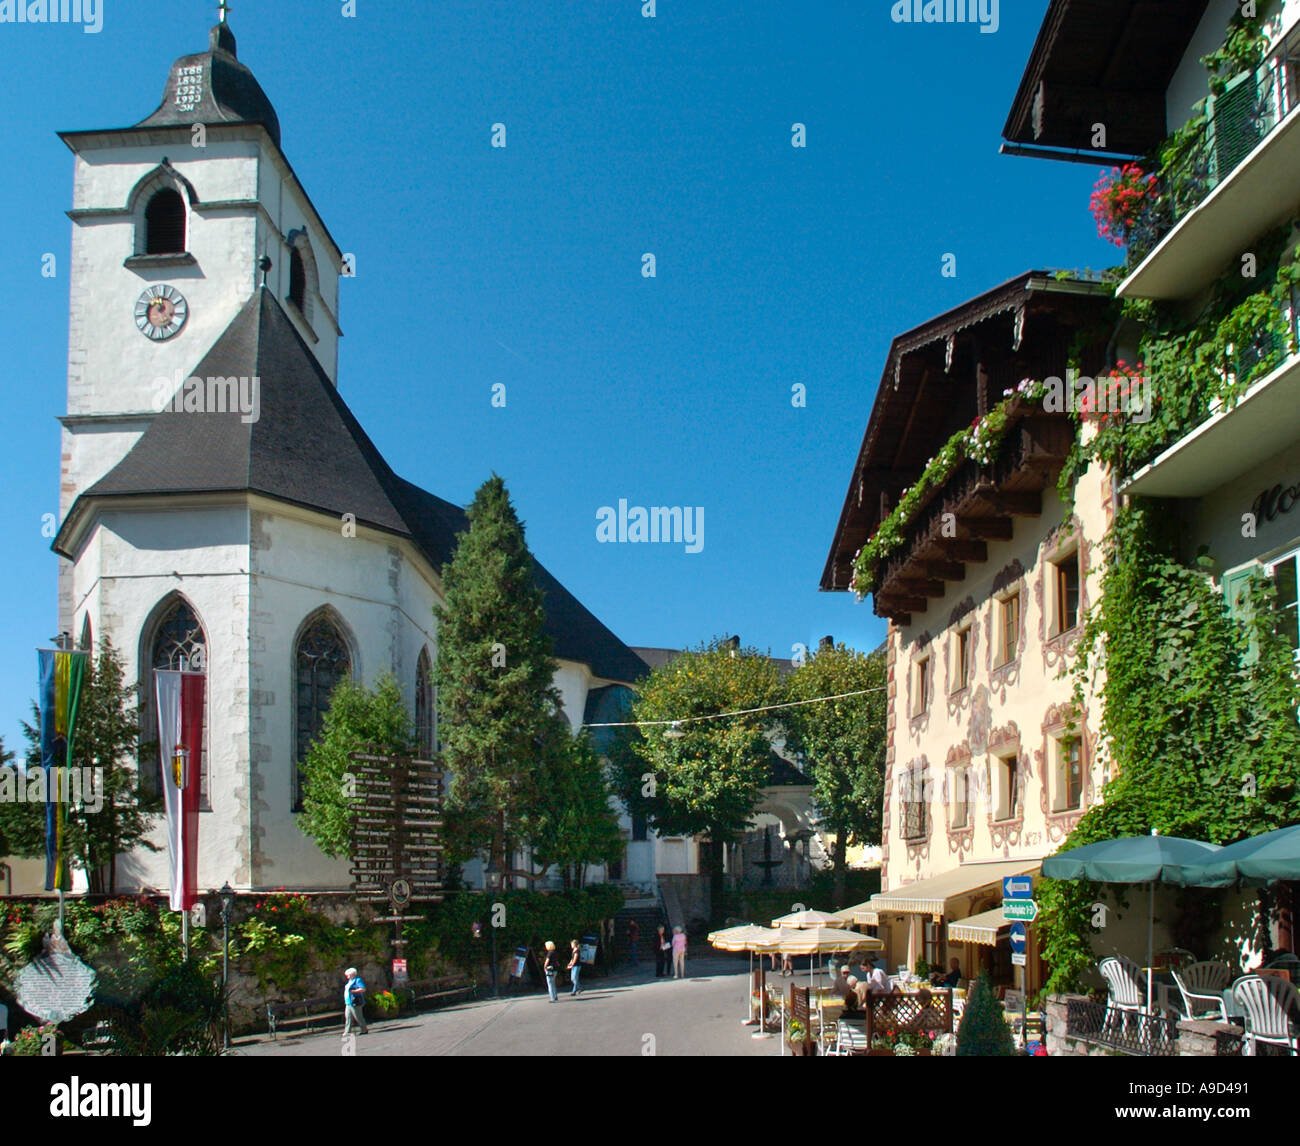 Chiesa e street cafe nel centro storico, St Wolfgang, lago di Wolfgang, Salzkammergut, Austria Foto Stock